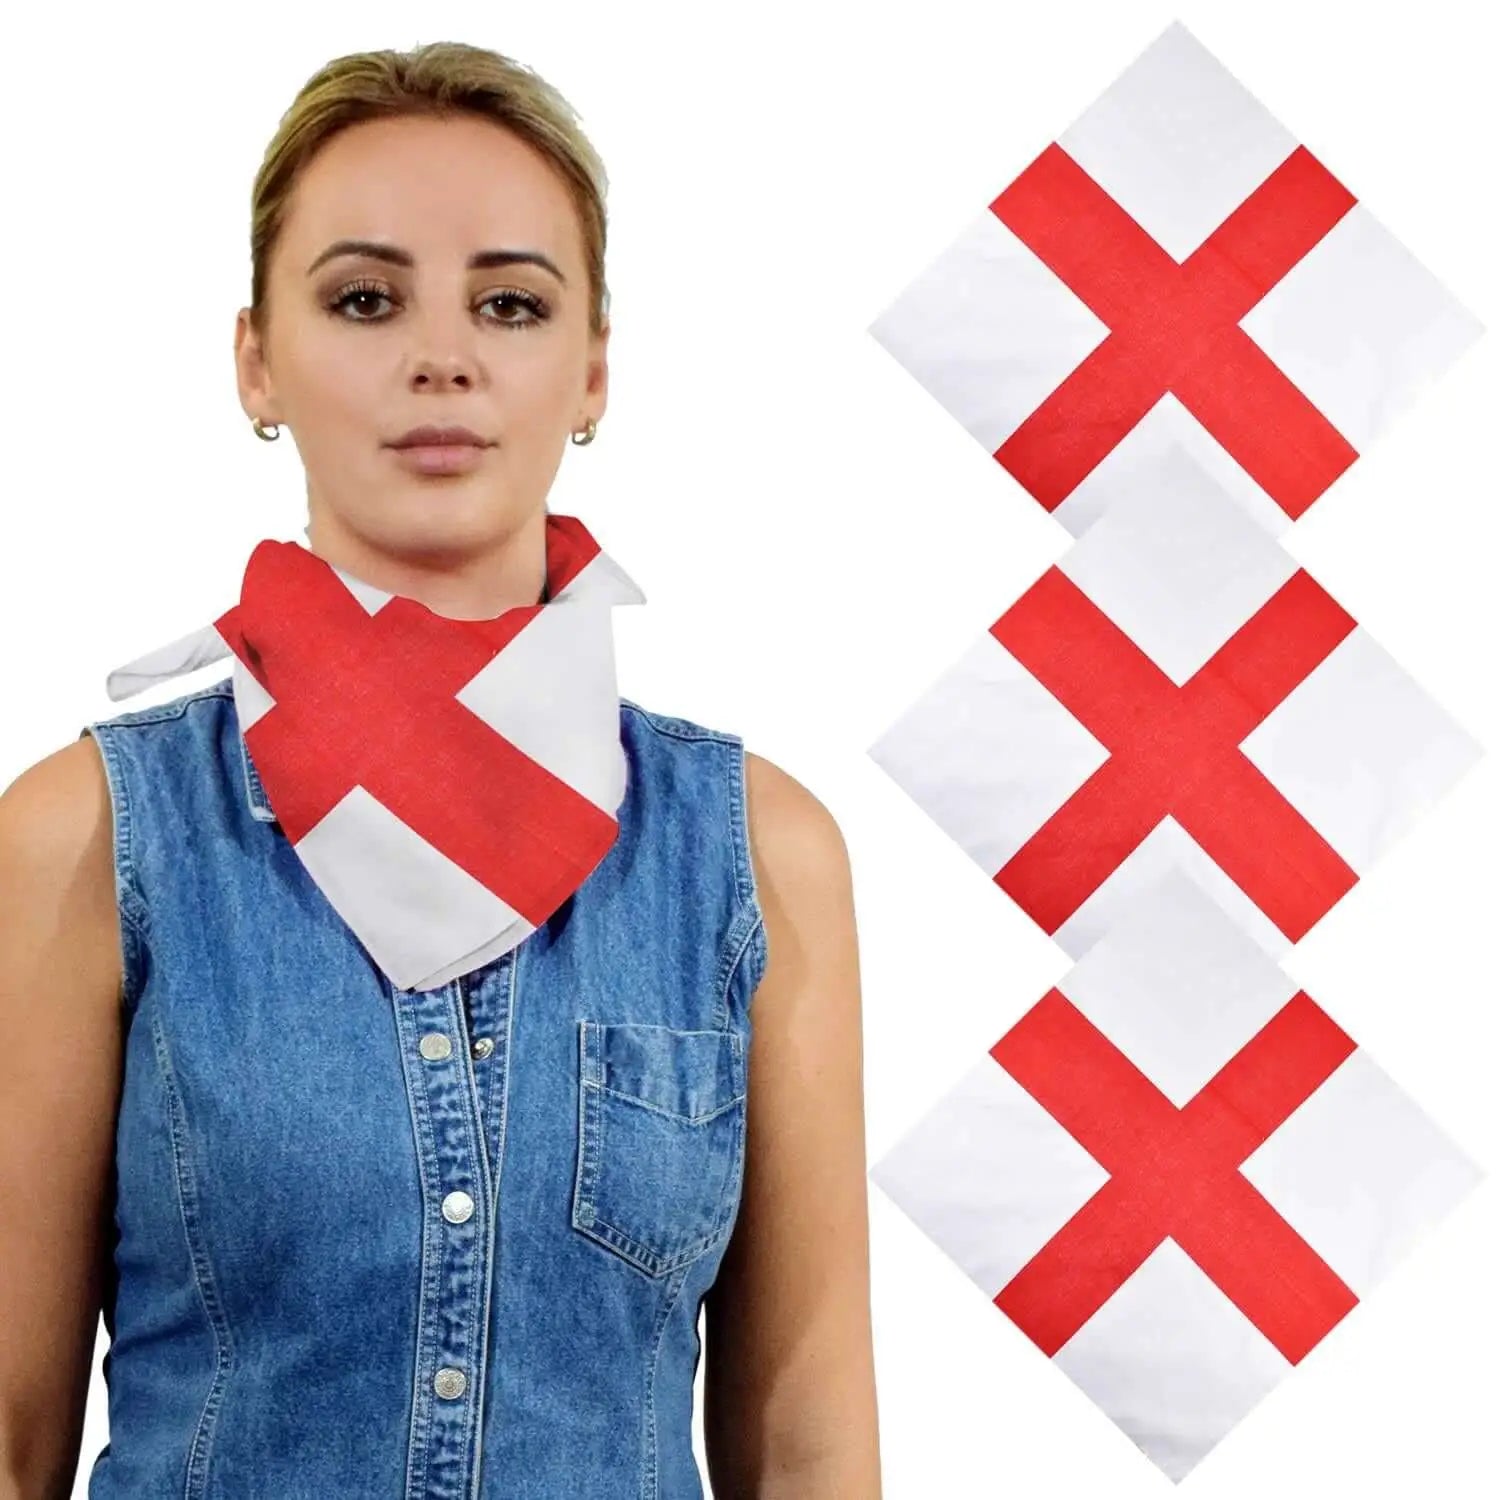 Woman wearing red and white St. George flag bandana set.